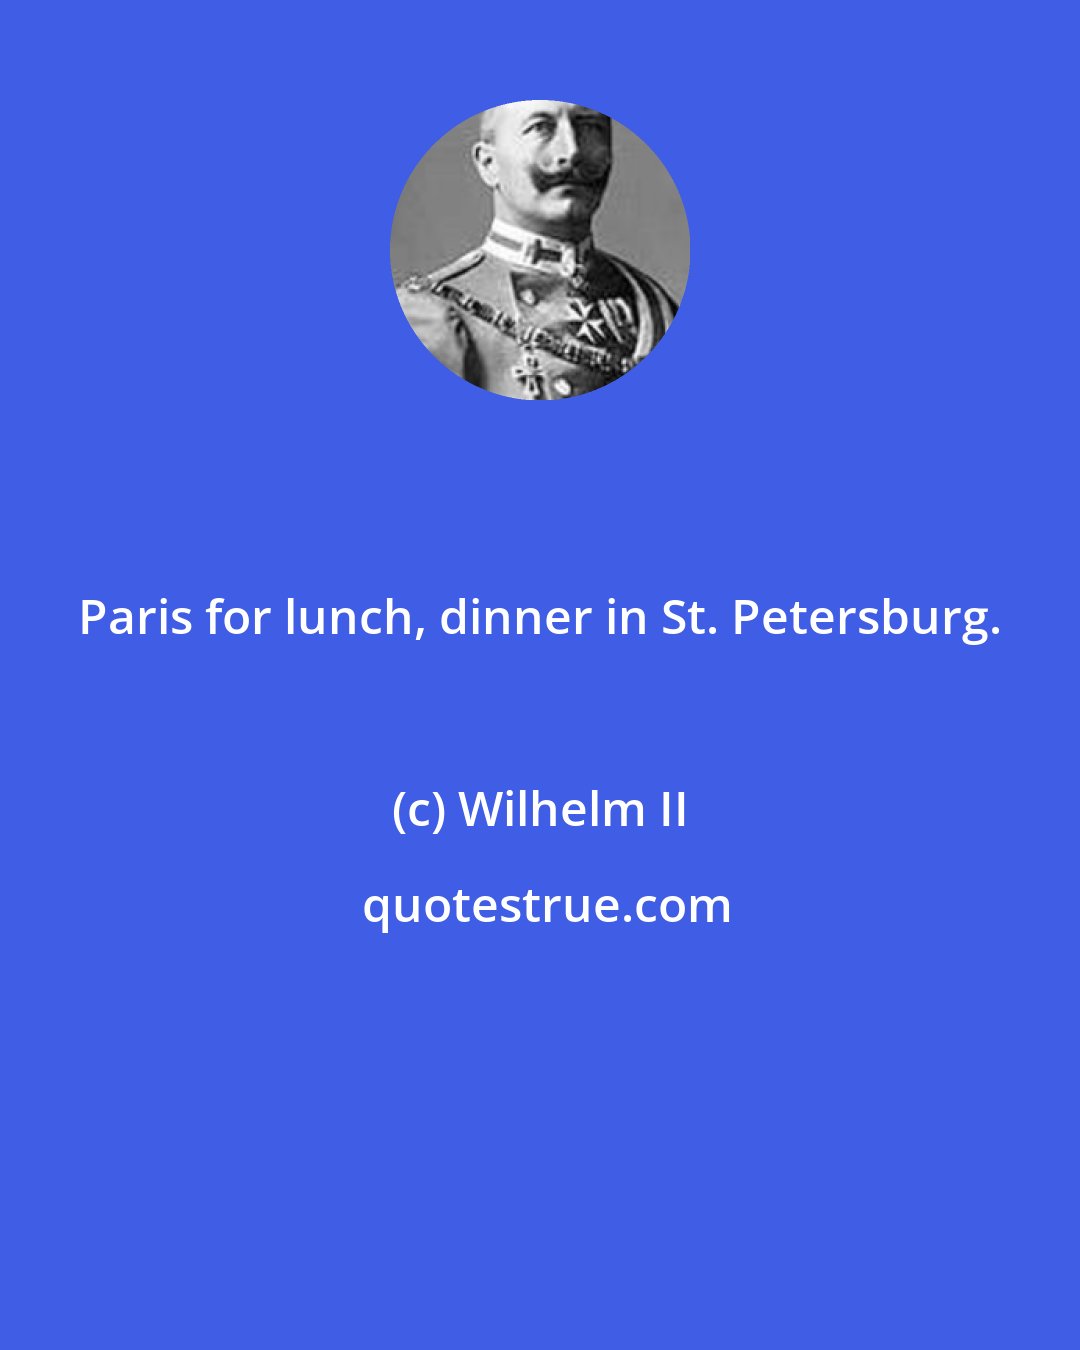 Wilhelm II: Paris for lunch, dinner in St. Petersburg.